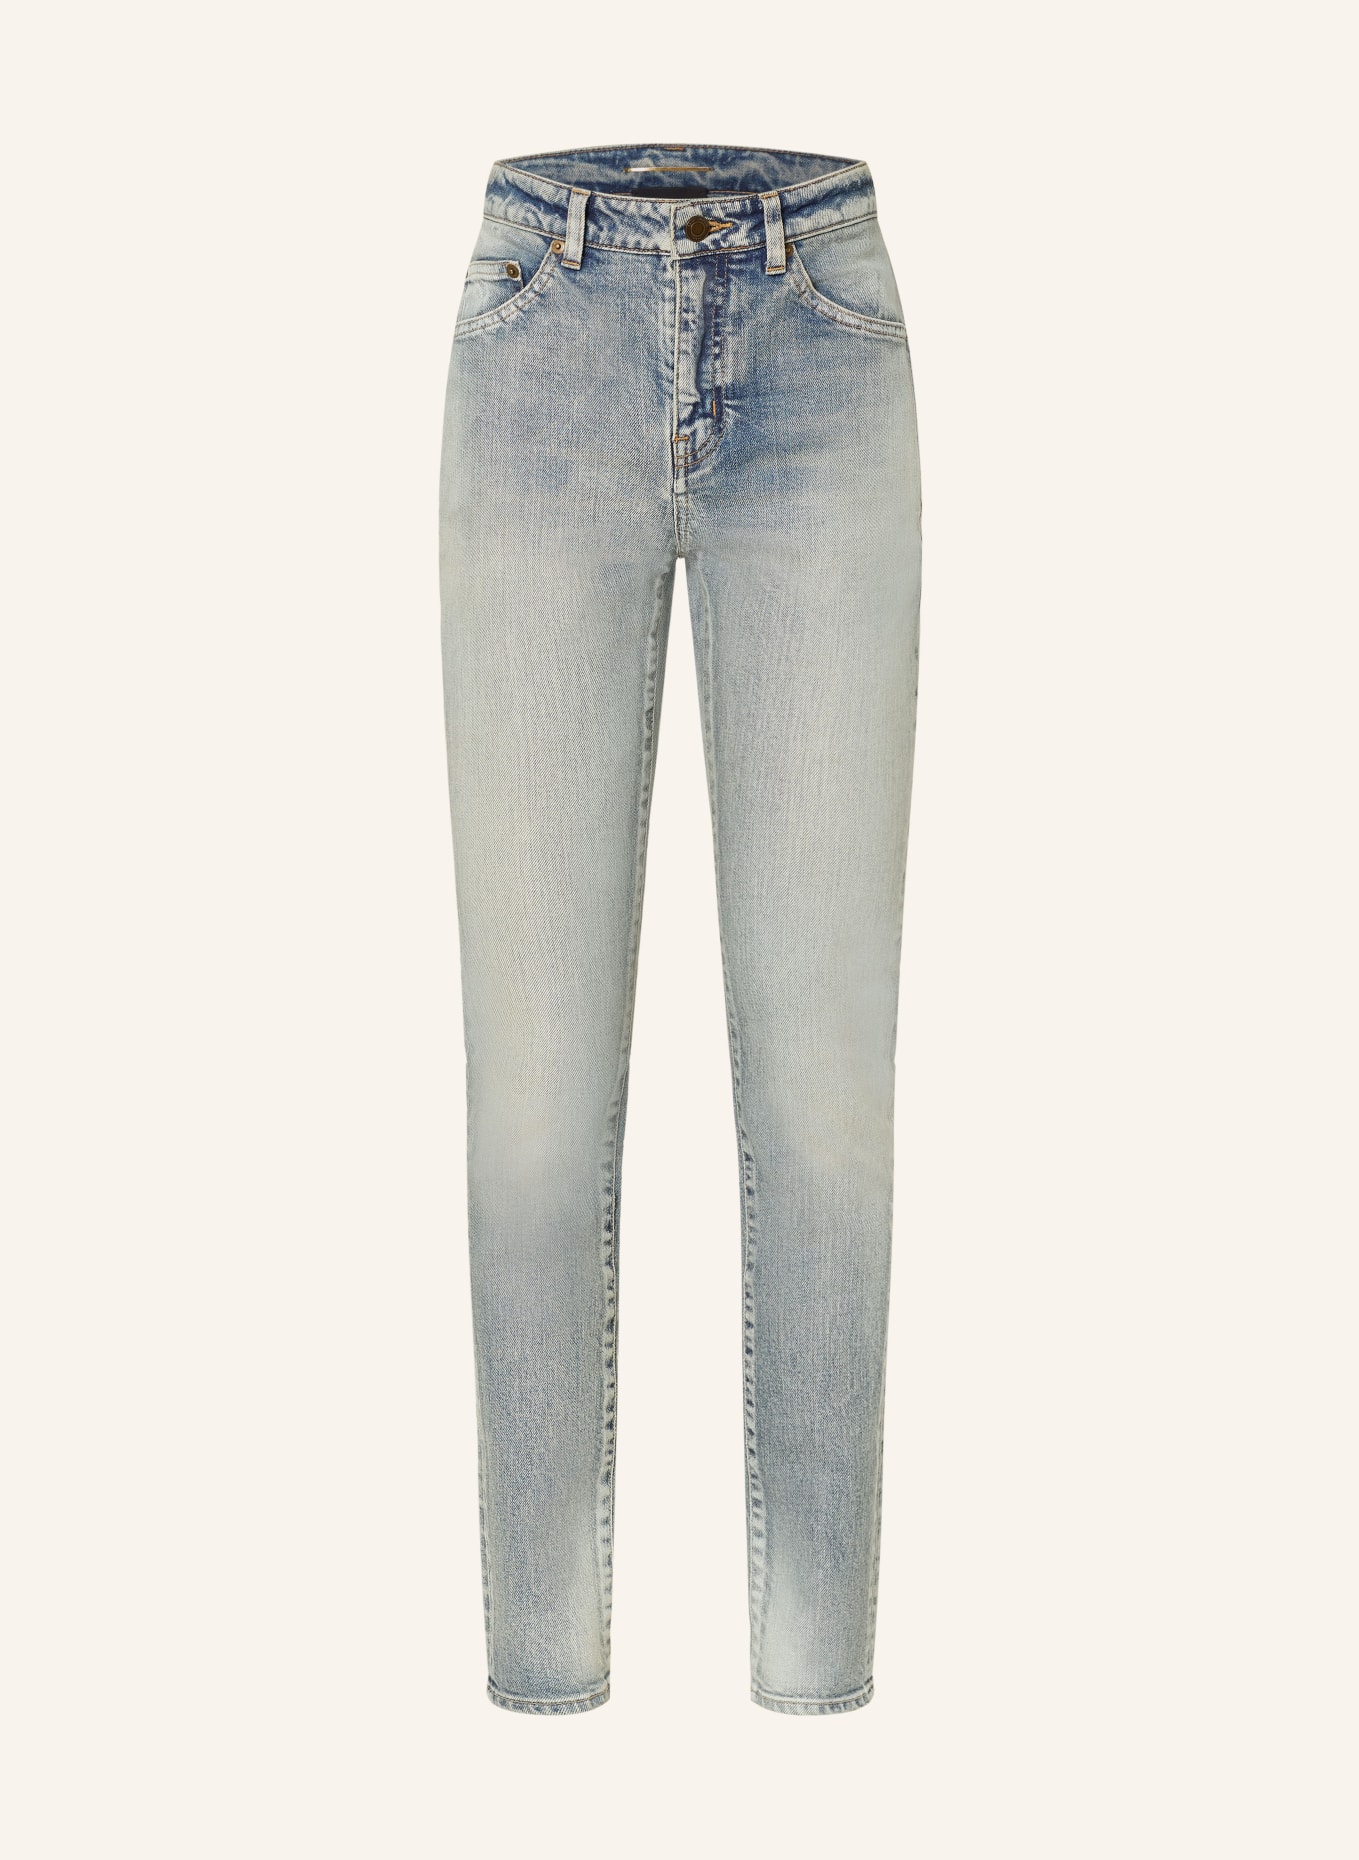 SAINT LAURENT Skinny Jeans, Farbe: 4741 BRIGHT BLUE (Bild 1)